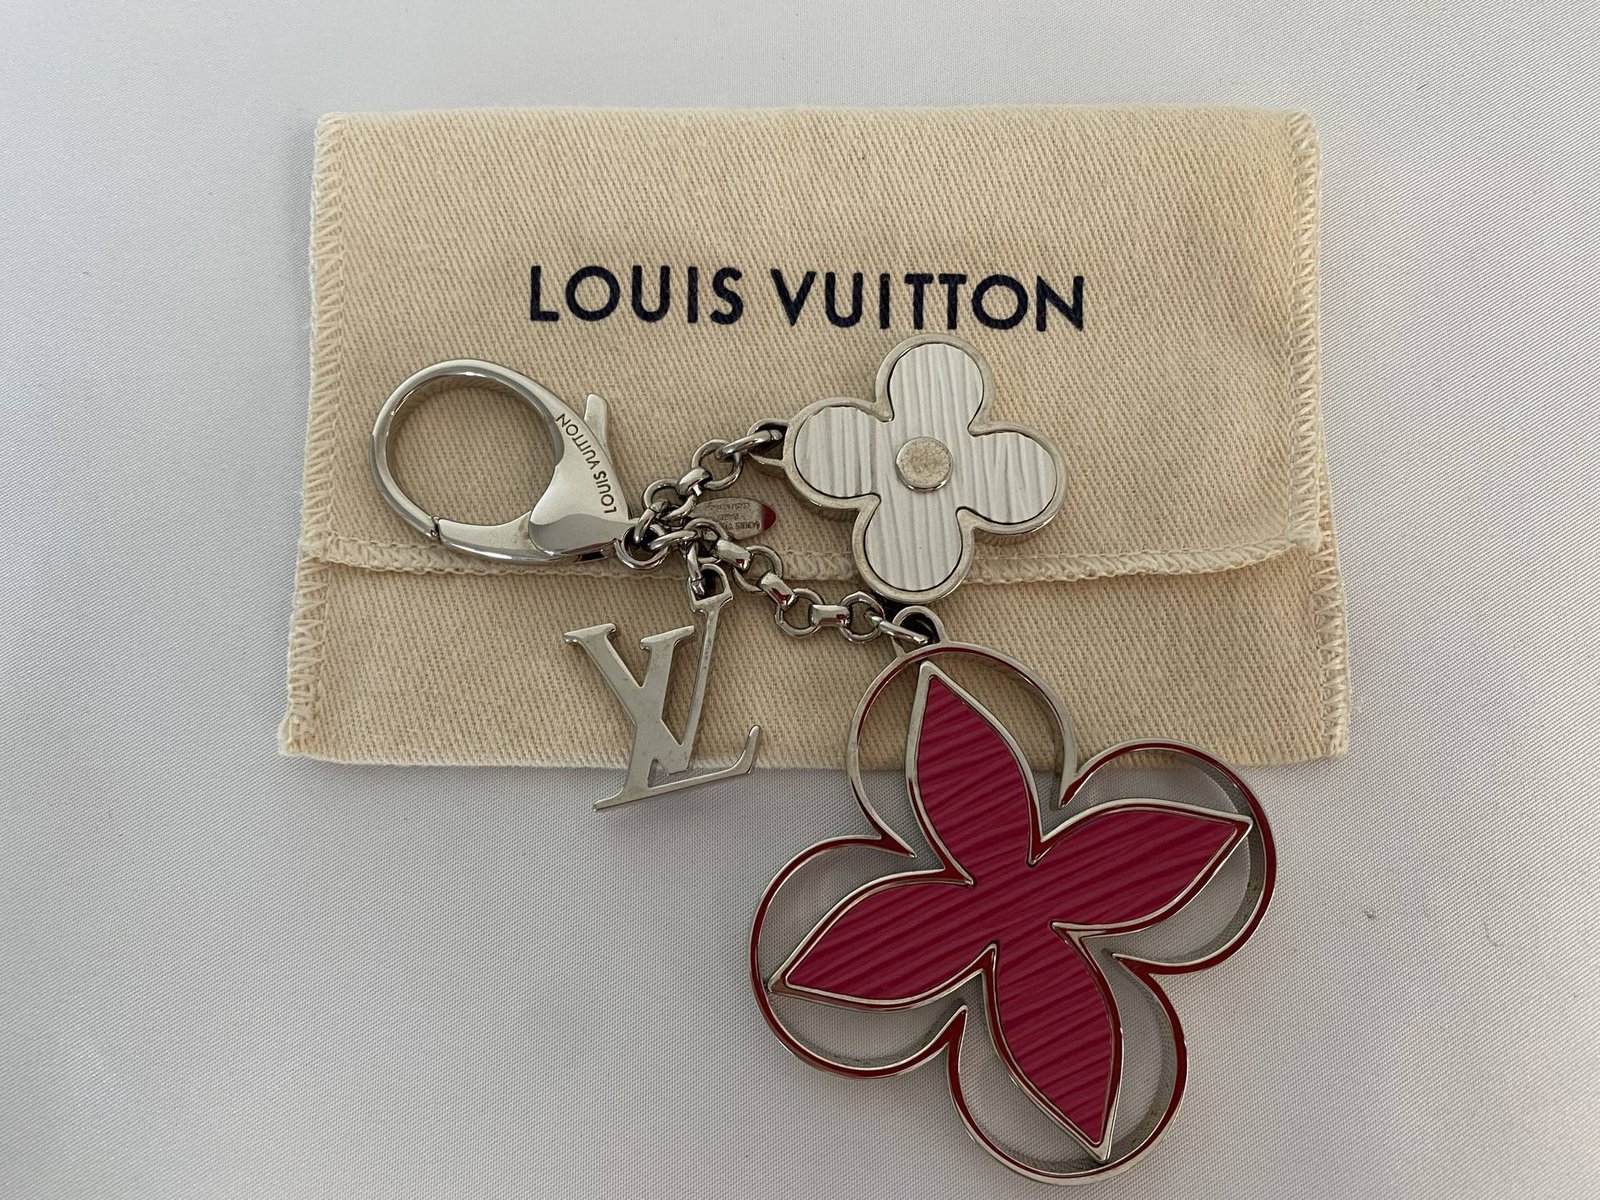 Louis Vuitton Key holder/bag charm - MaBelleSac